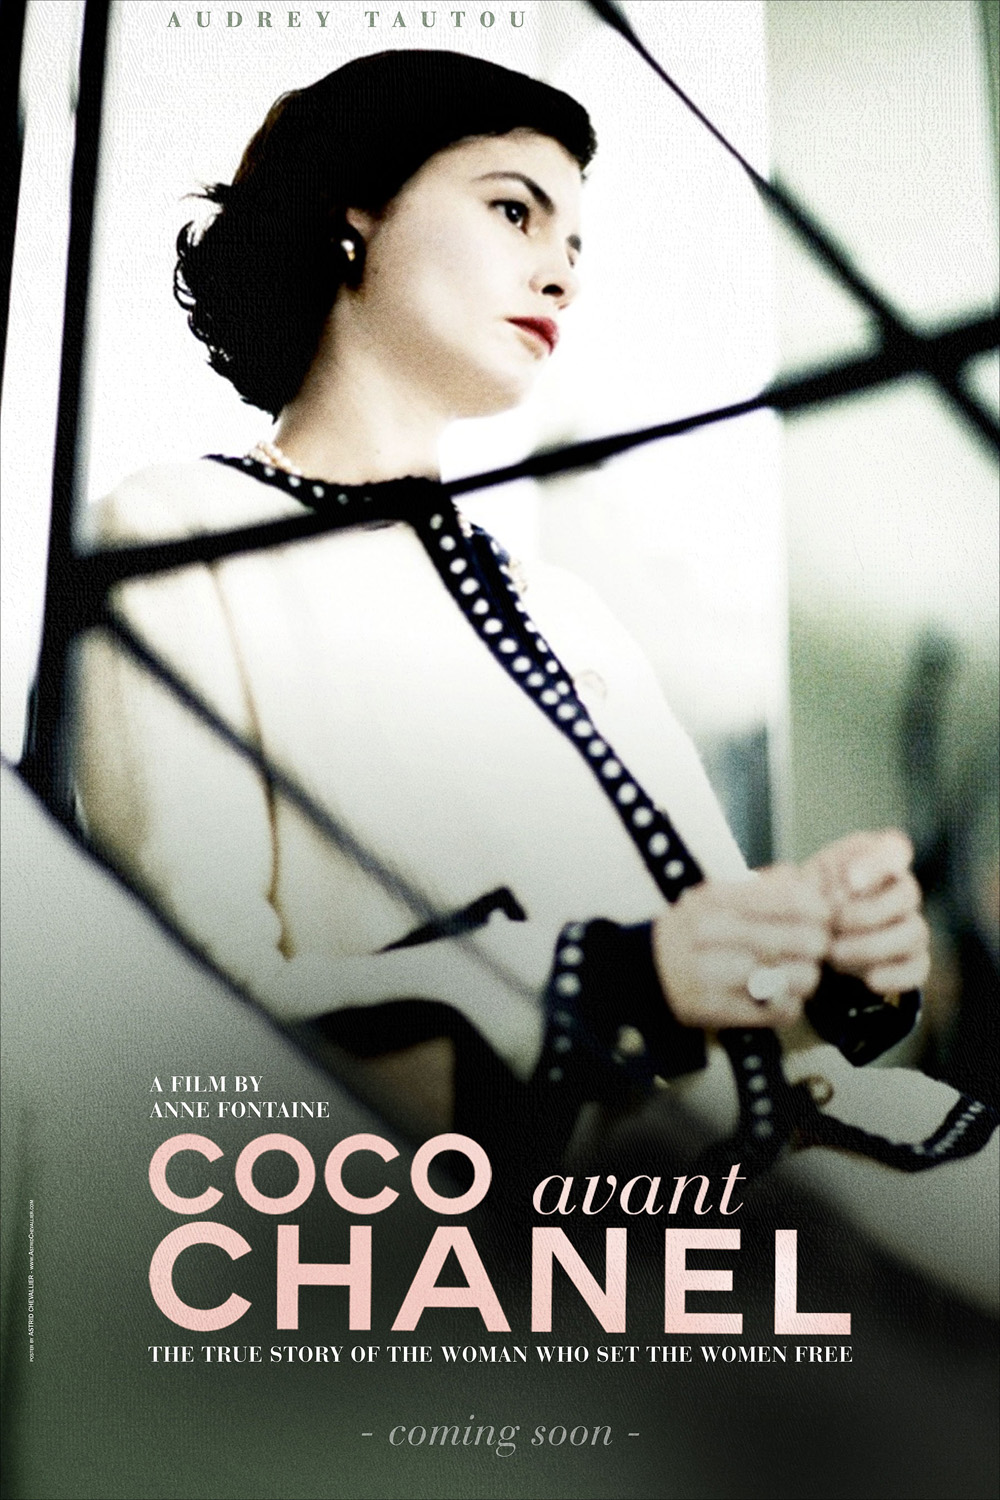 Coco Before Chanel, Movie fanart